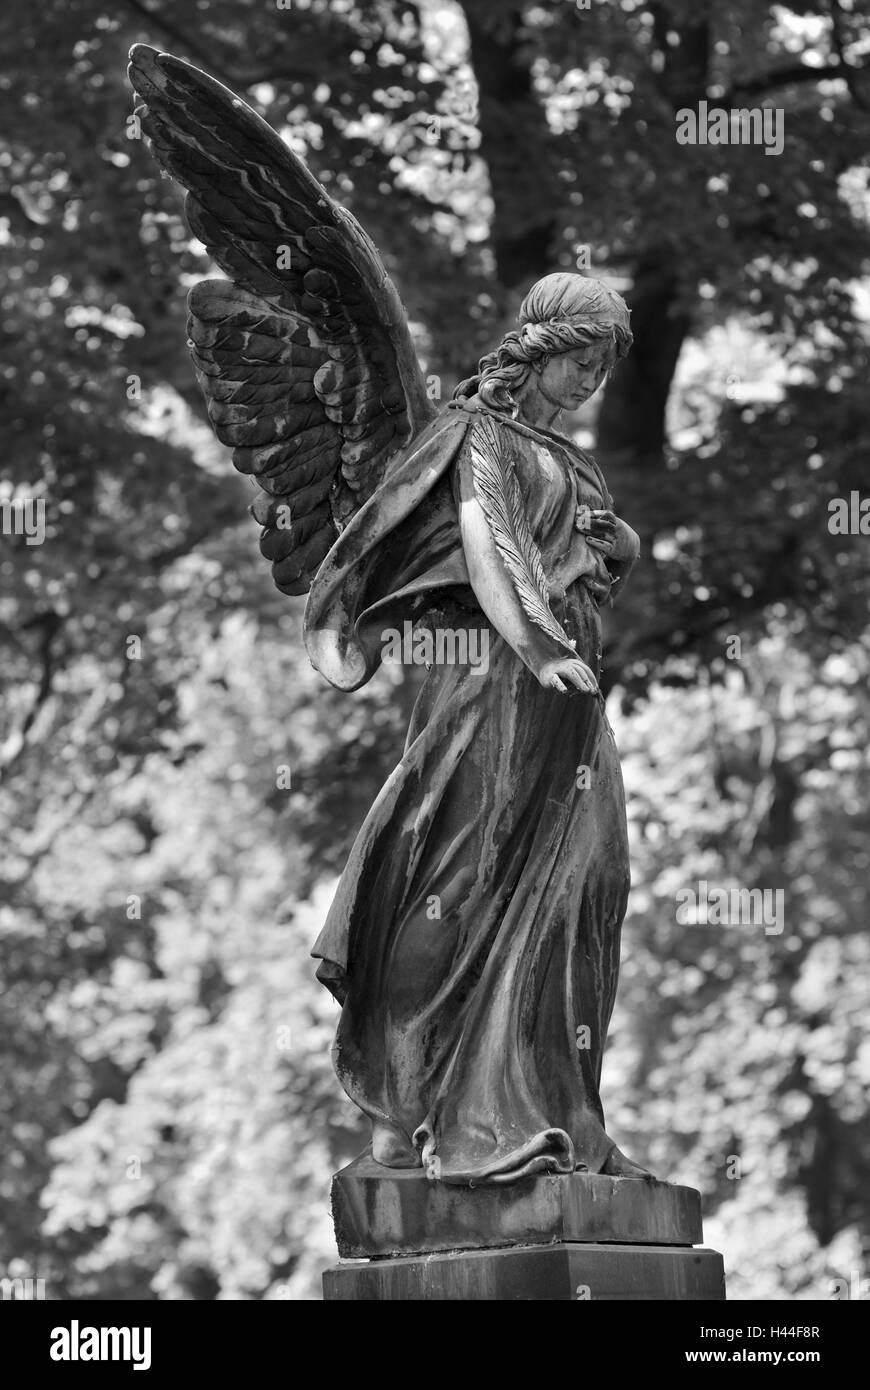 Engel, Statue, Kopf, Flügel, Baum, Zweige, Blätter, s/w, Stockfoto